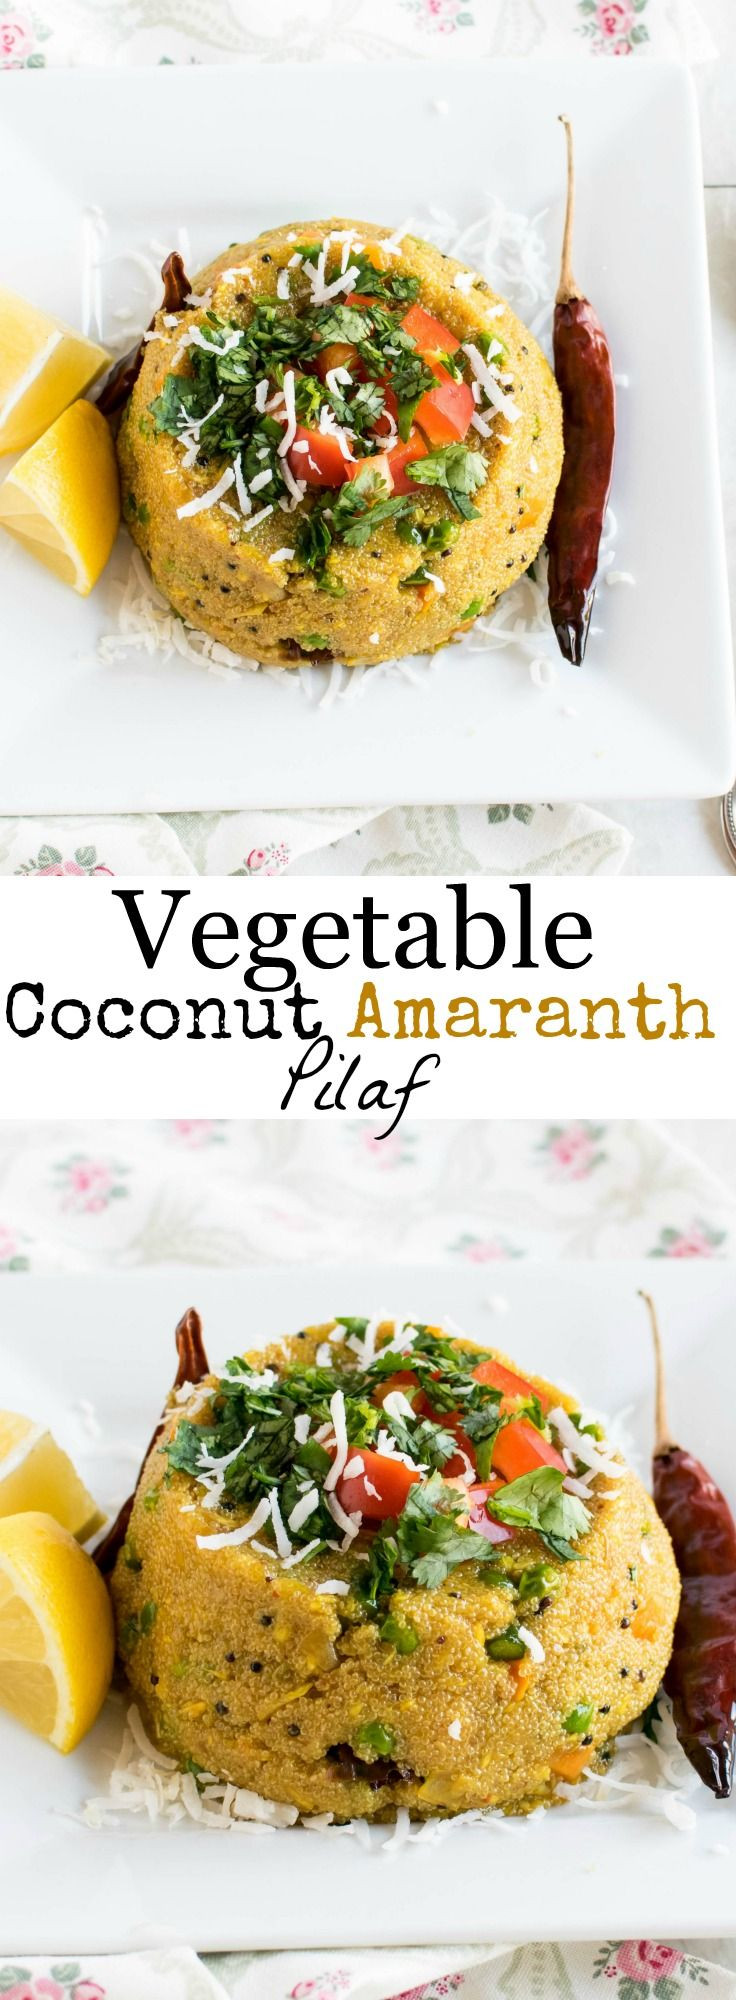 Vegetarian Grain Free Recipes
 Ve able Coconut Amaranth Pilaf